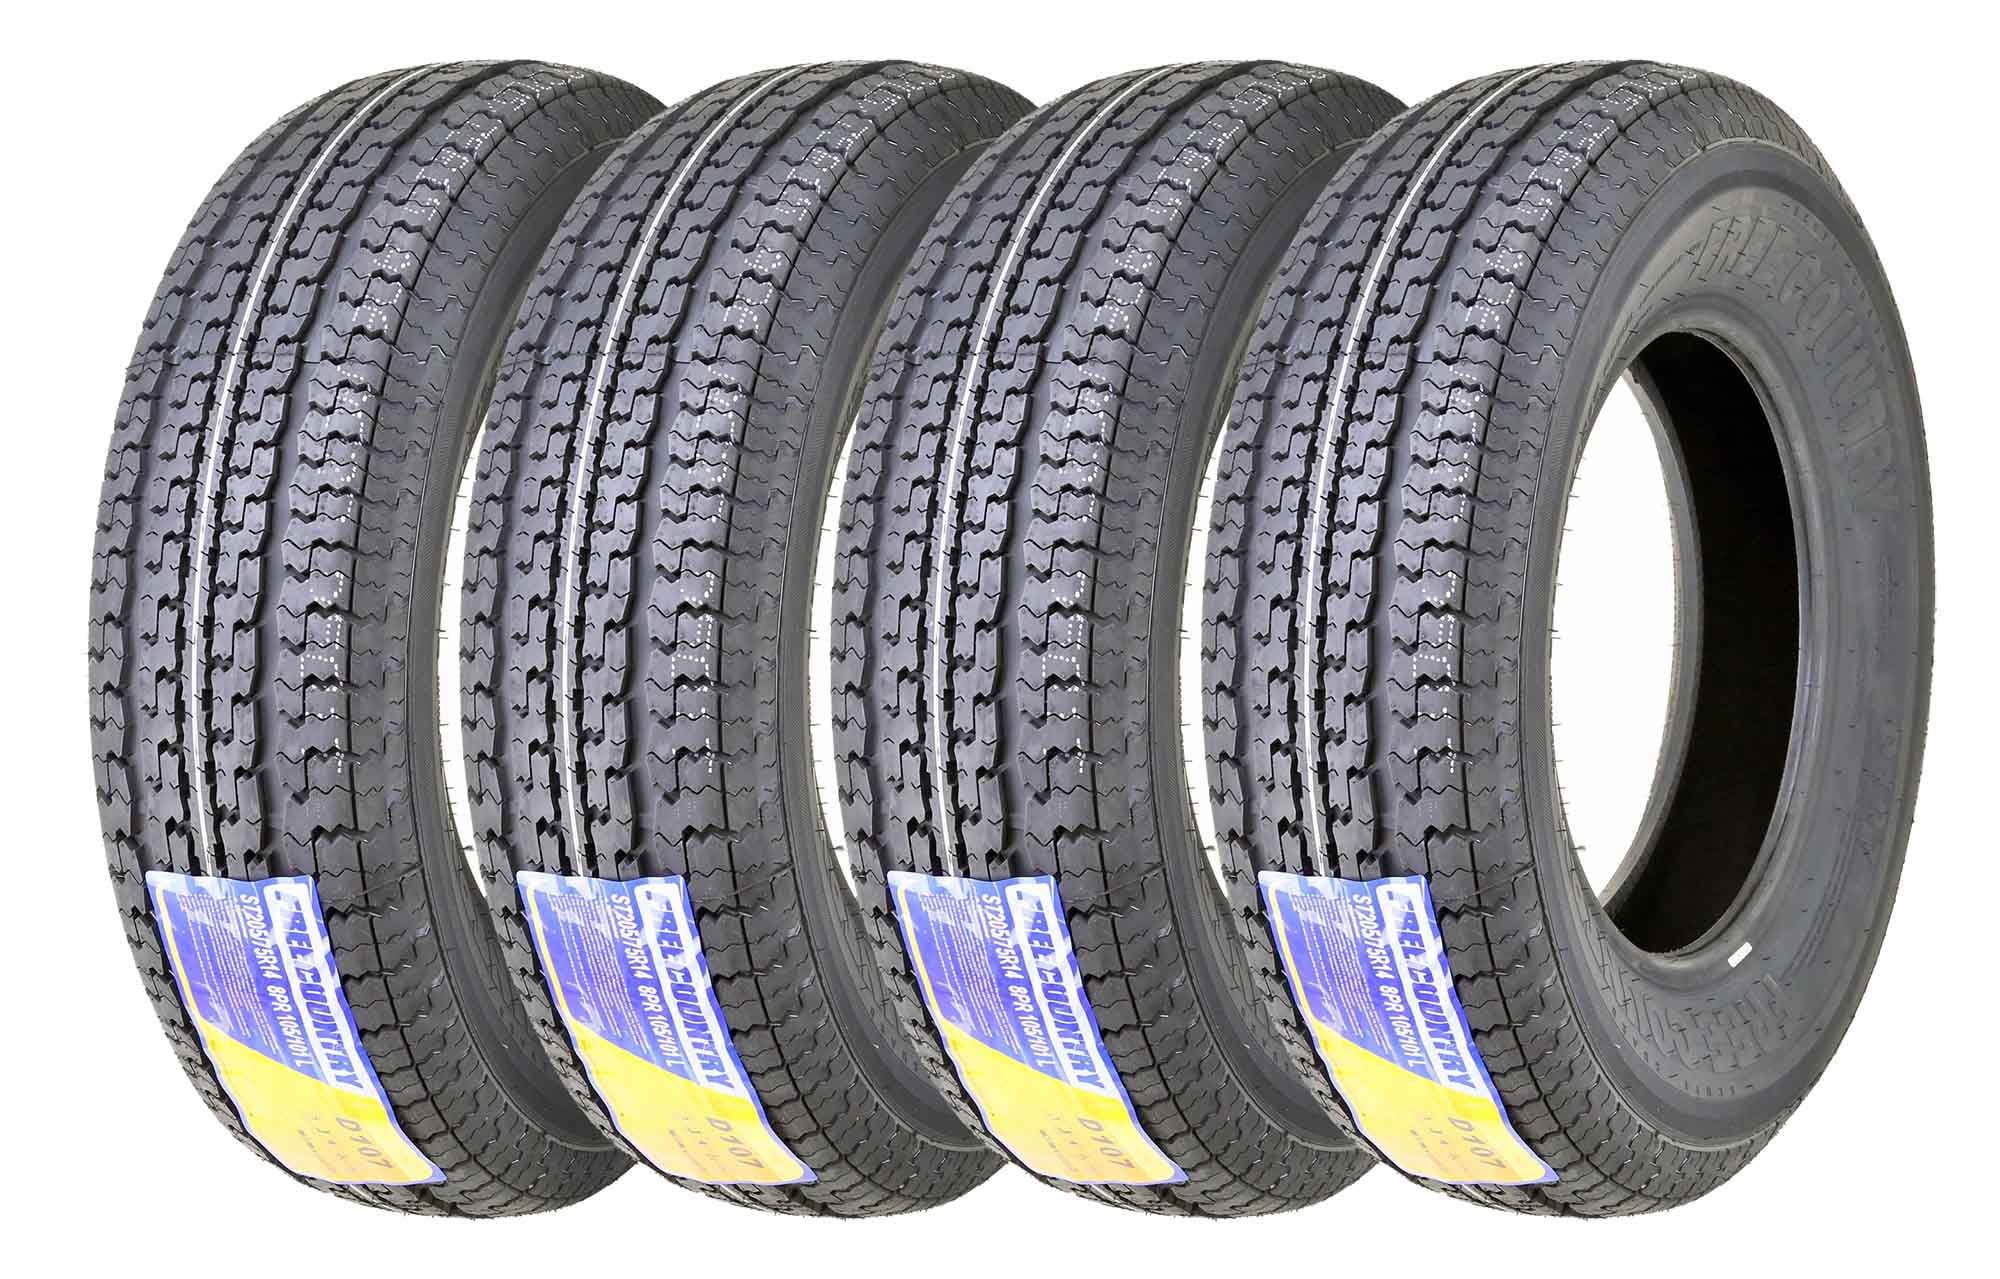 LIBRA TRAILER PARTS 4 New Premium WINDA Trailer Tires ST 205 75R14 8PR Load Range D Steel Belted Radial w/Scuff Guard 